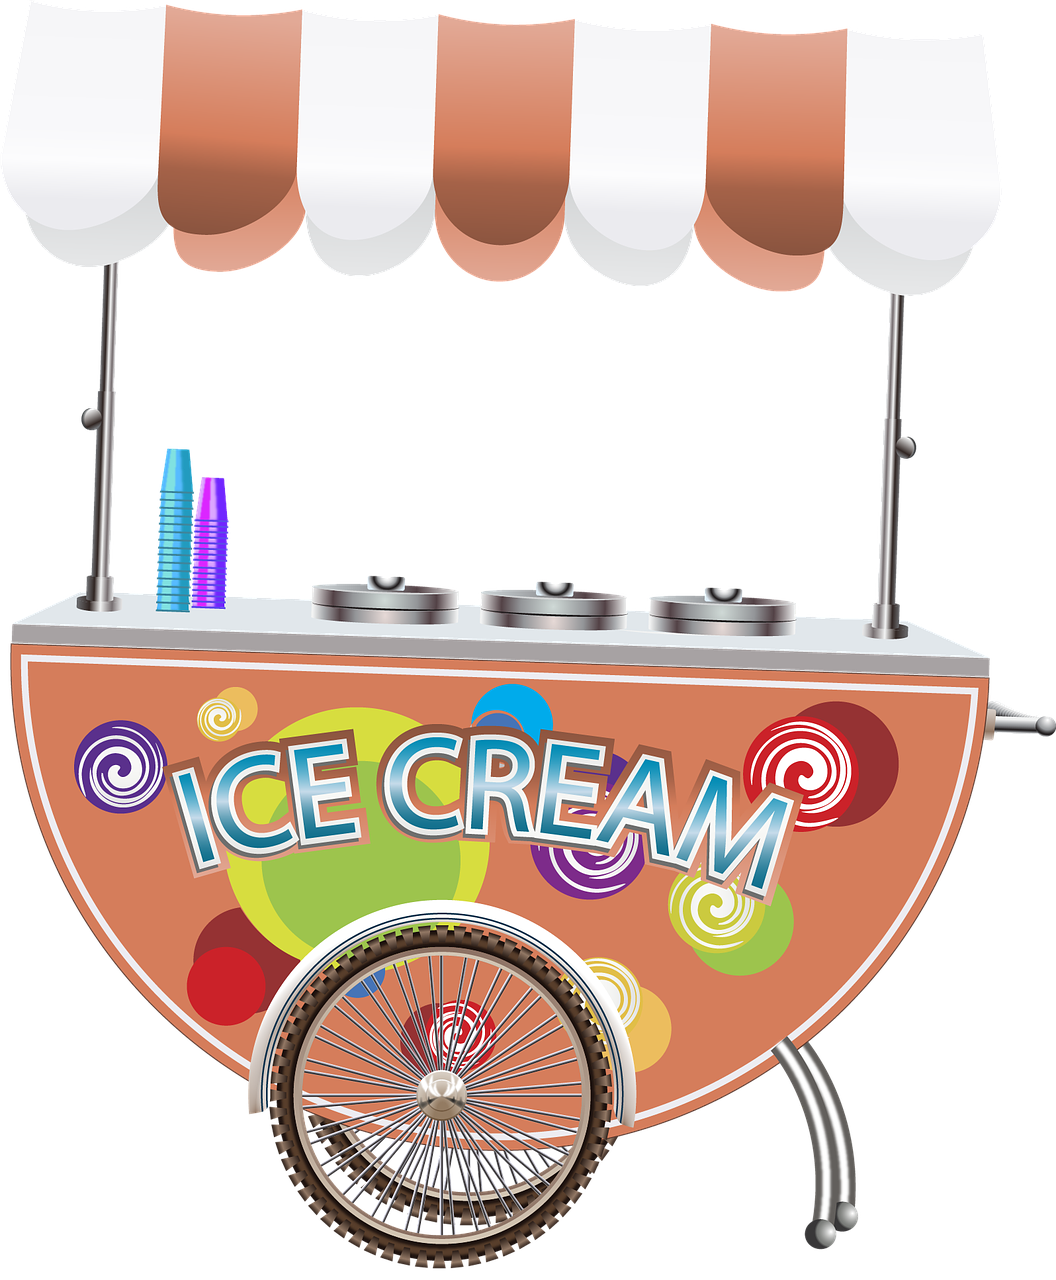 ice cream truck flavors free photo